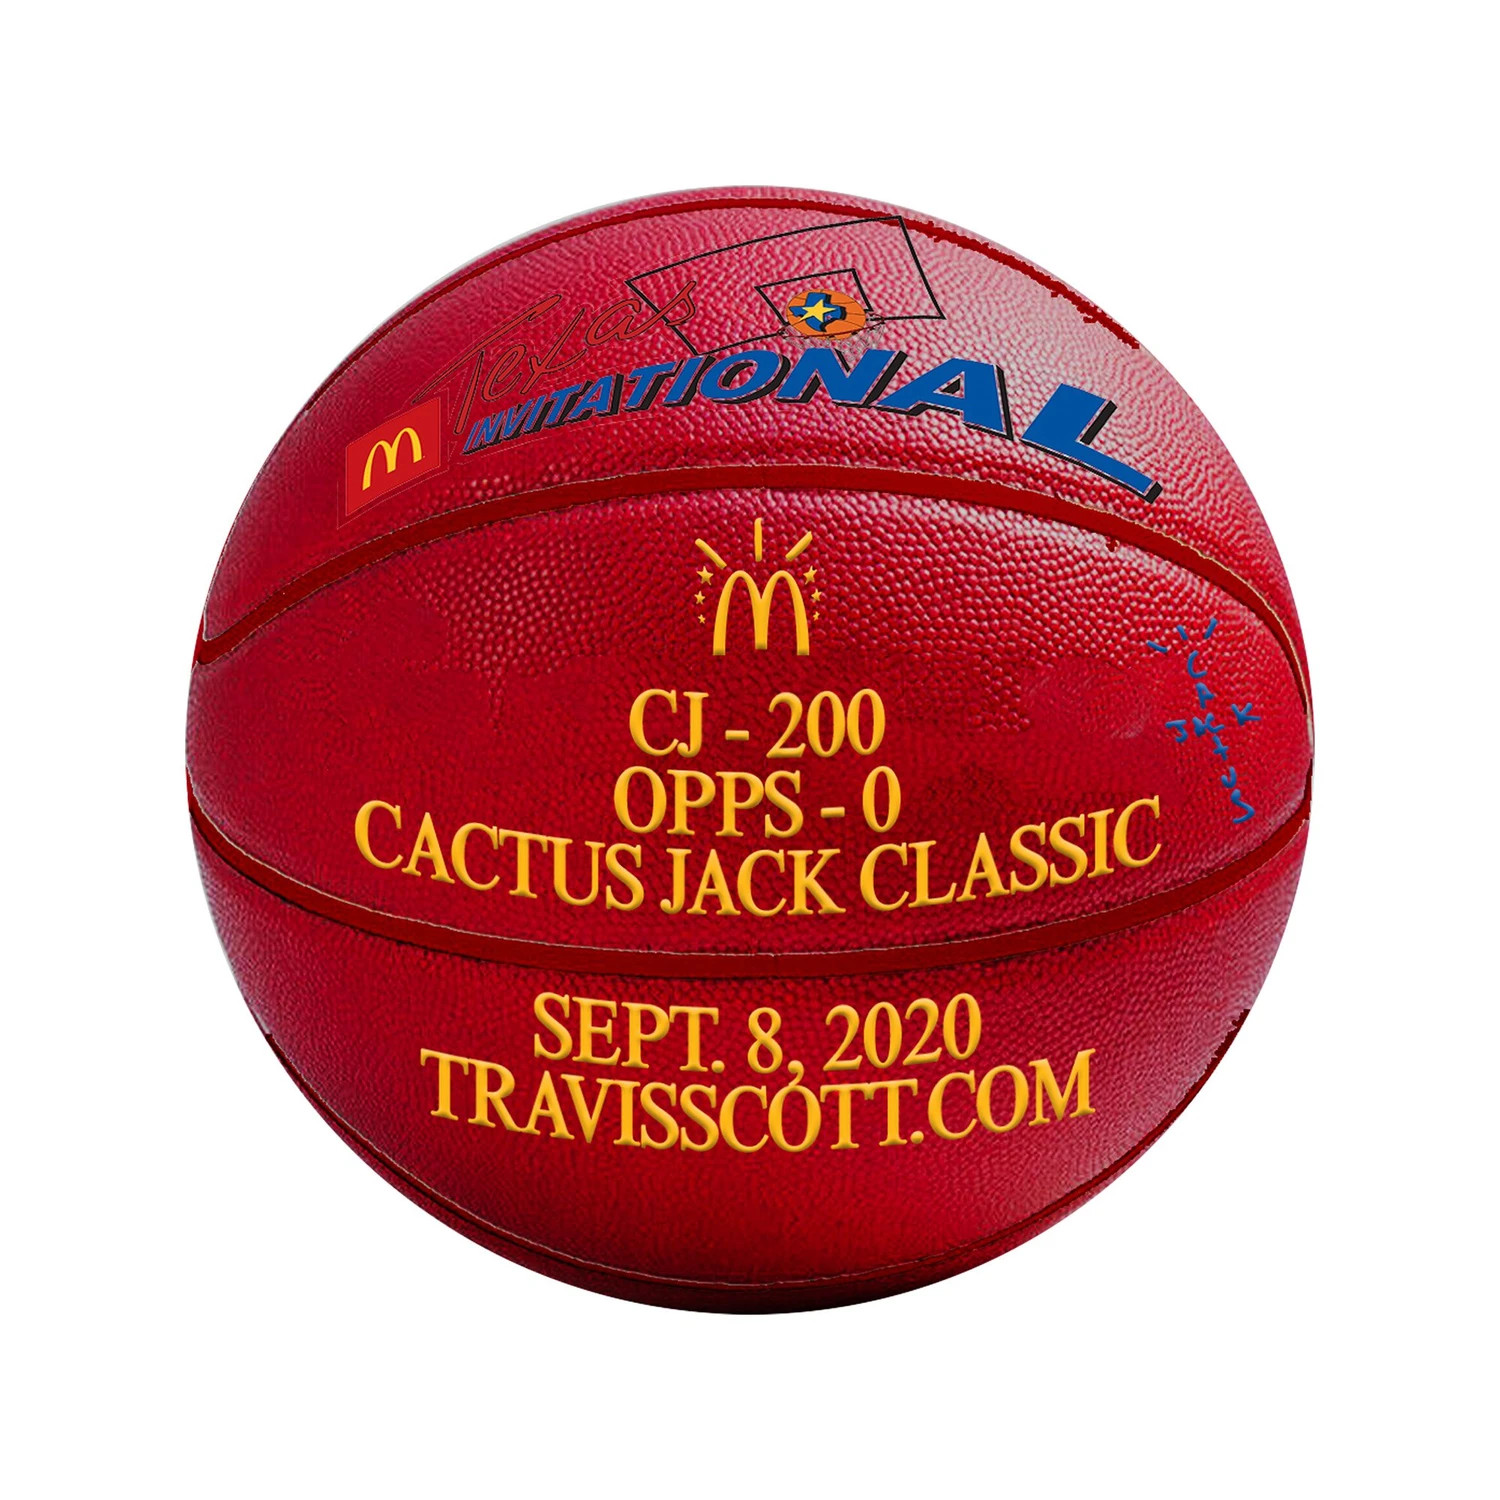 Travis Scott x McDonalds basket ball